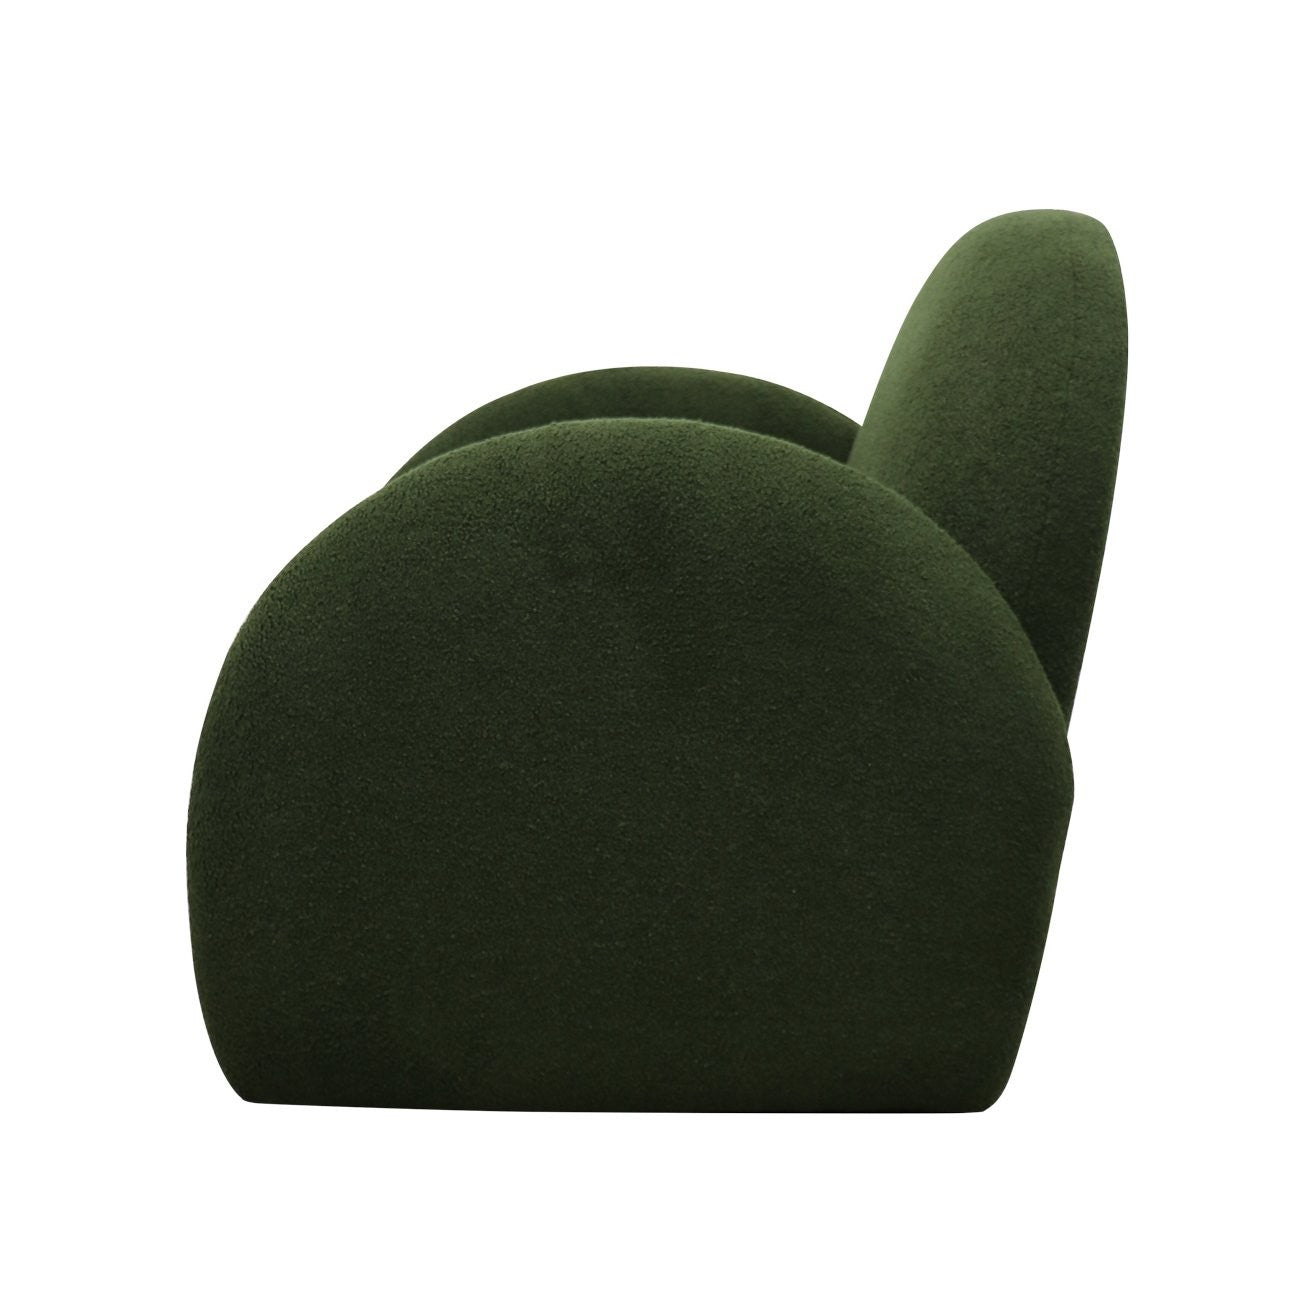 Snugg Swivel Occasional Chair - Green Shearling